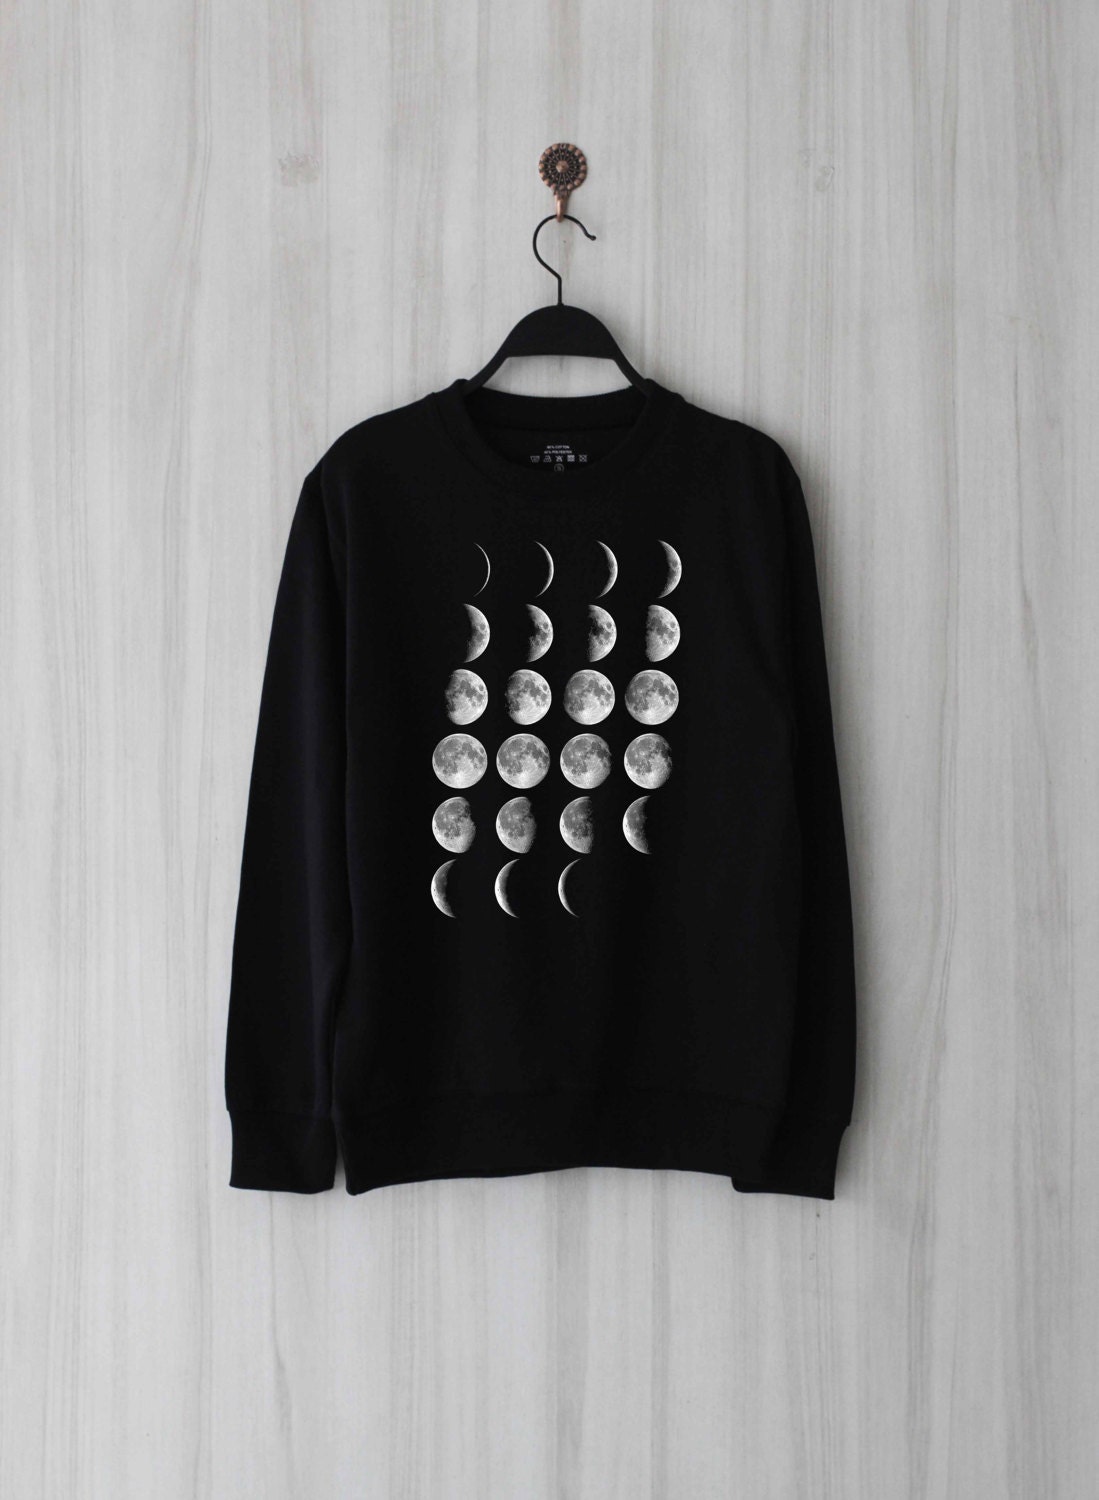 Moon Phase Moon Cycle Sweatshirt Sweater Jumper Pullover Shirt